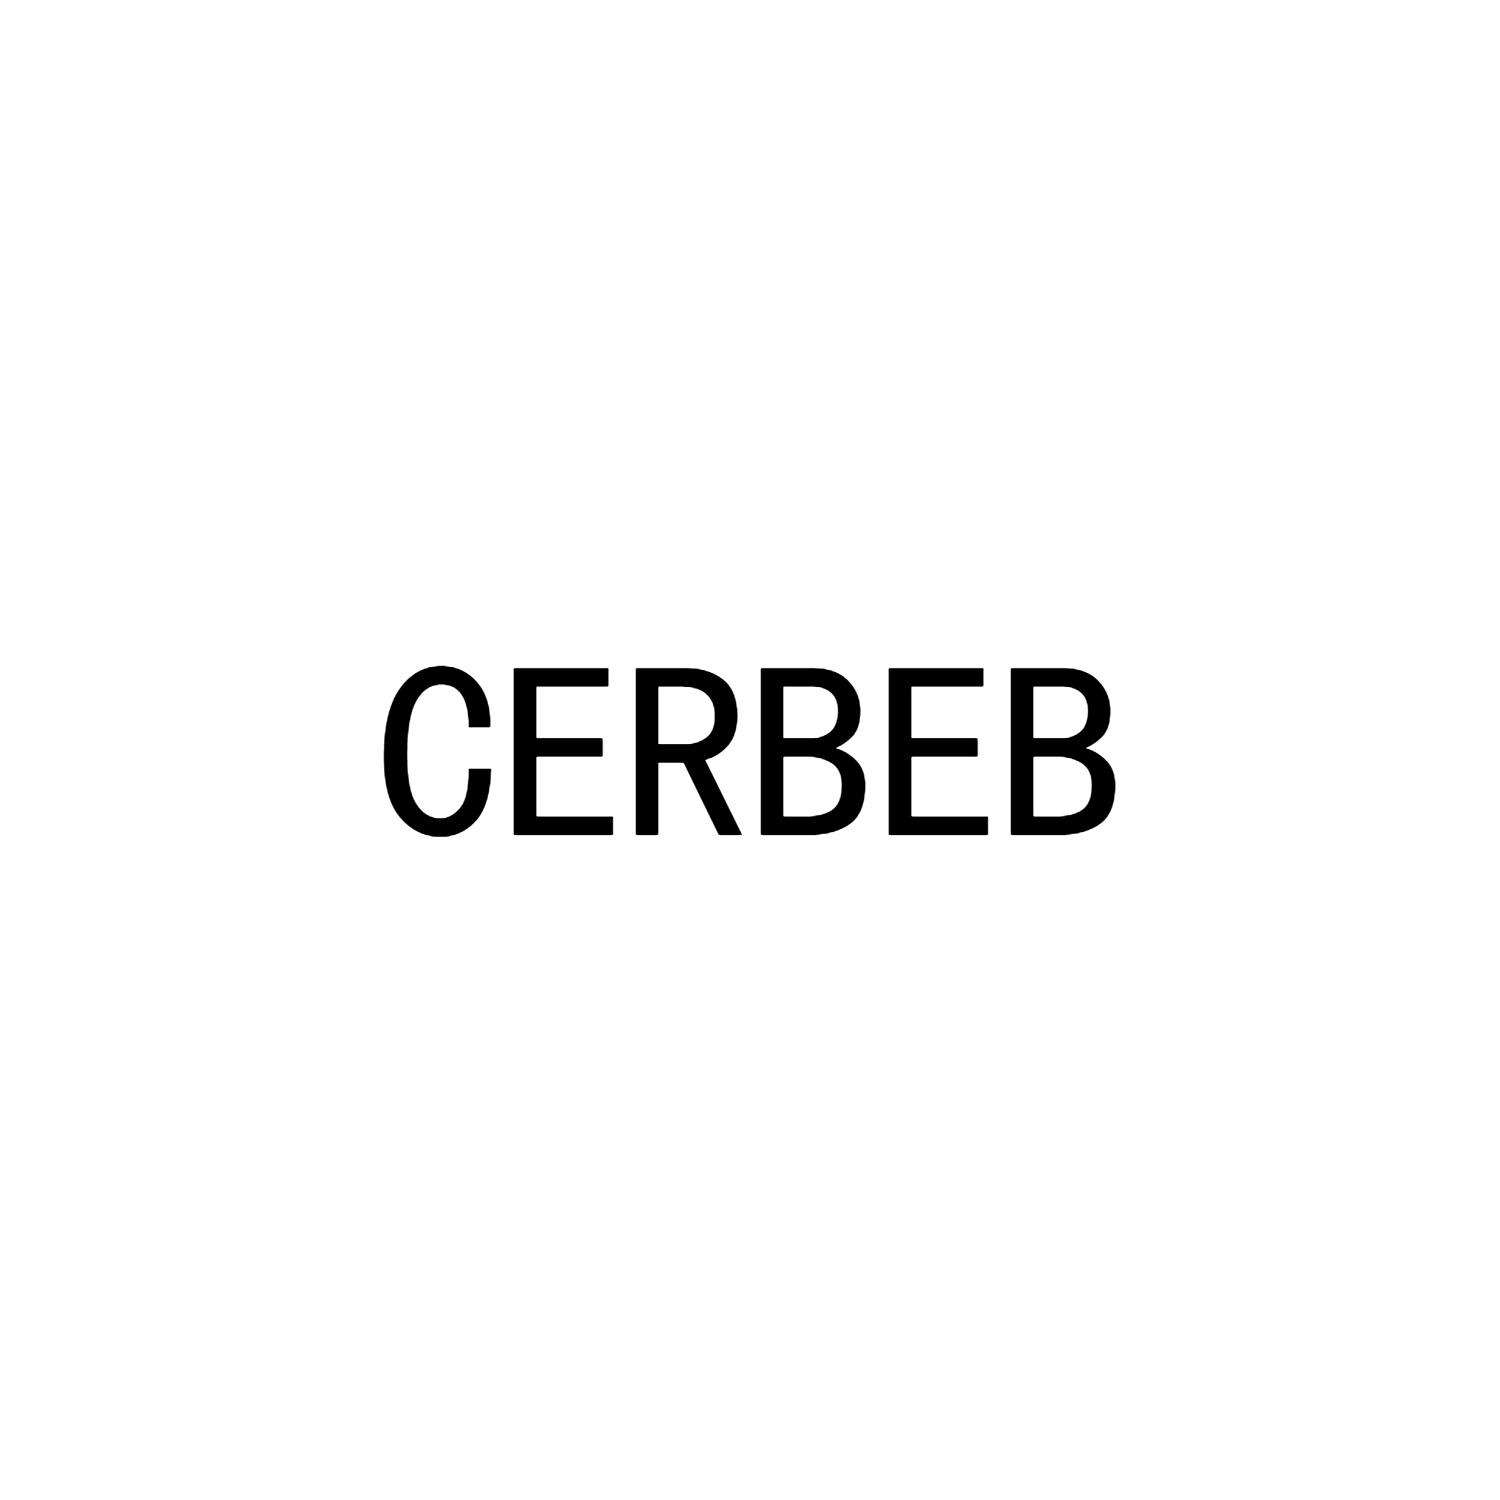 CERBEB